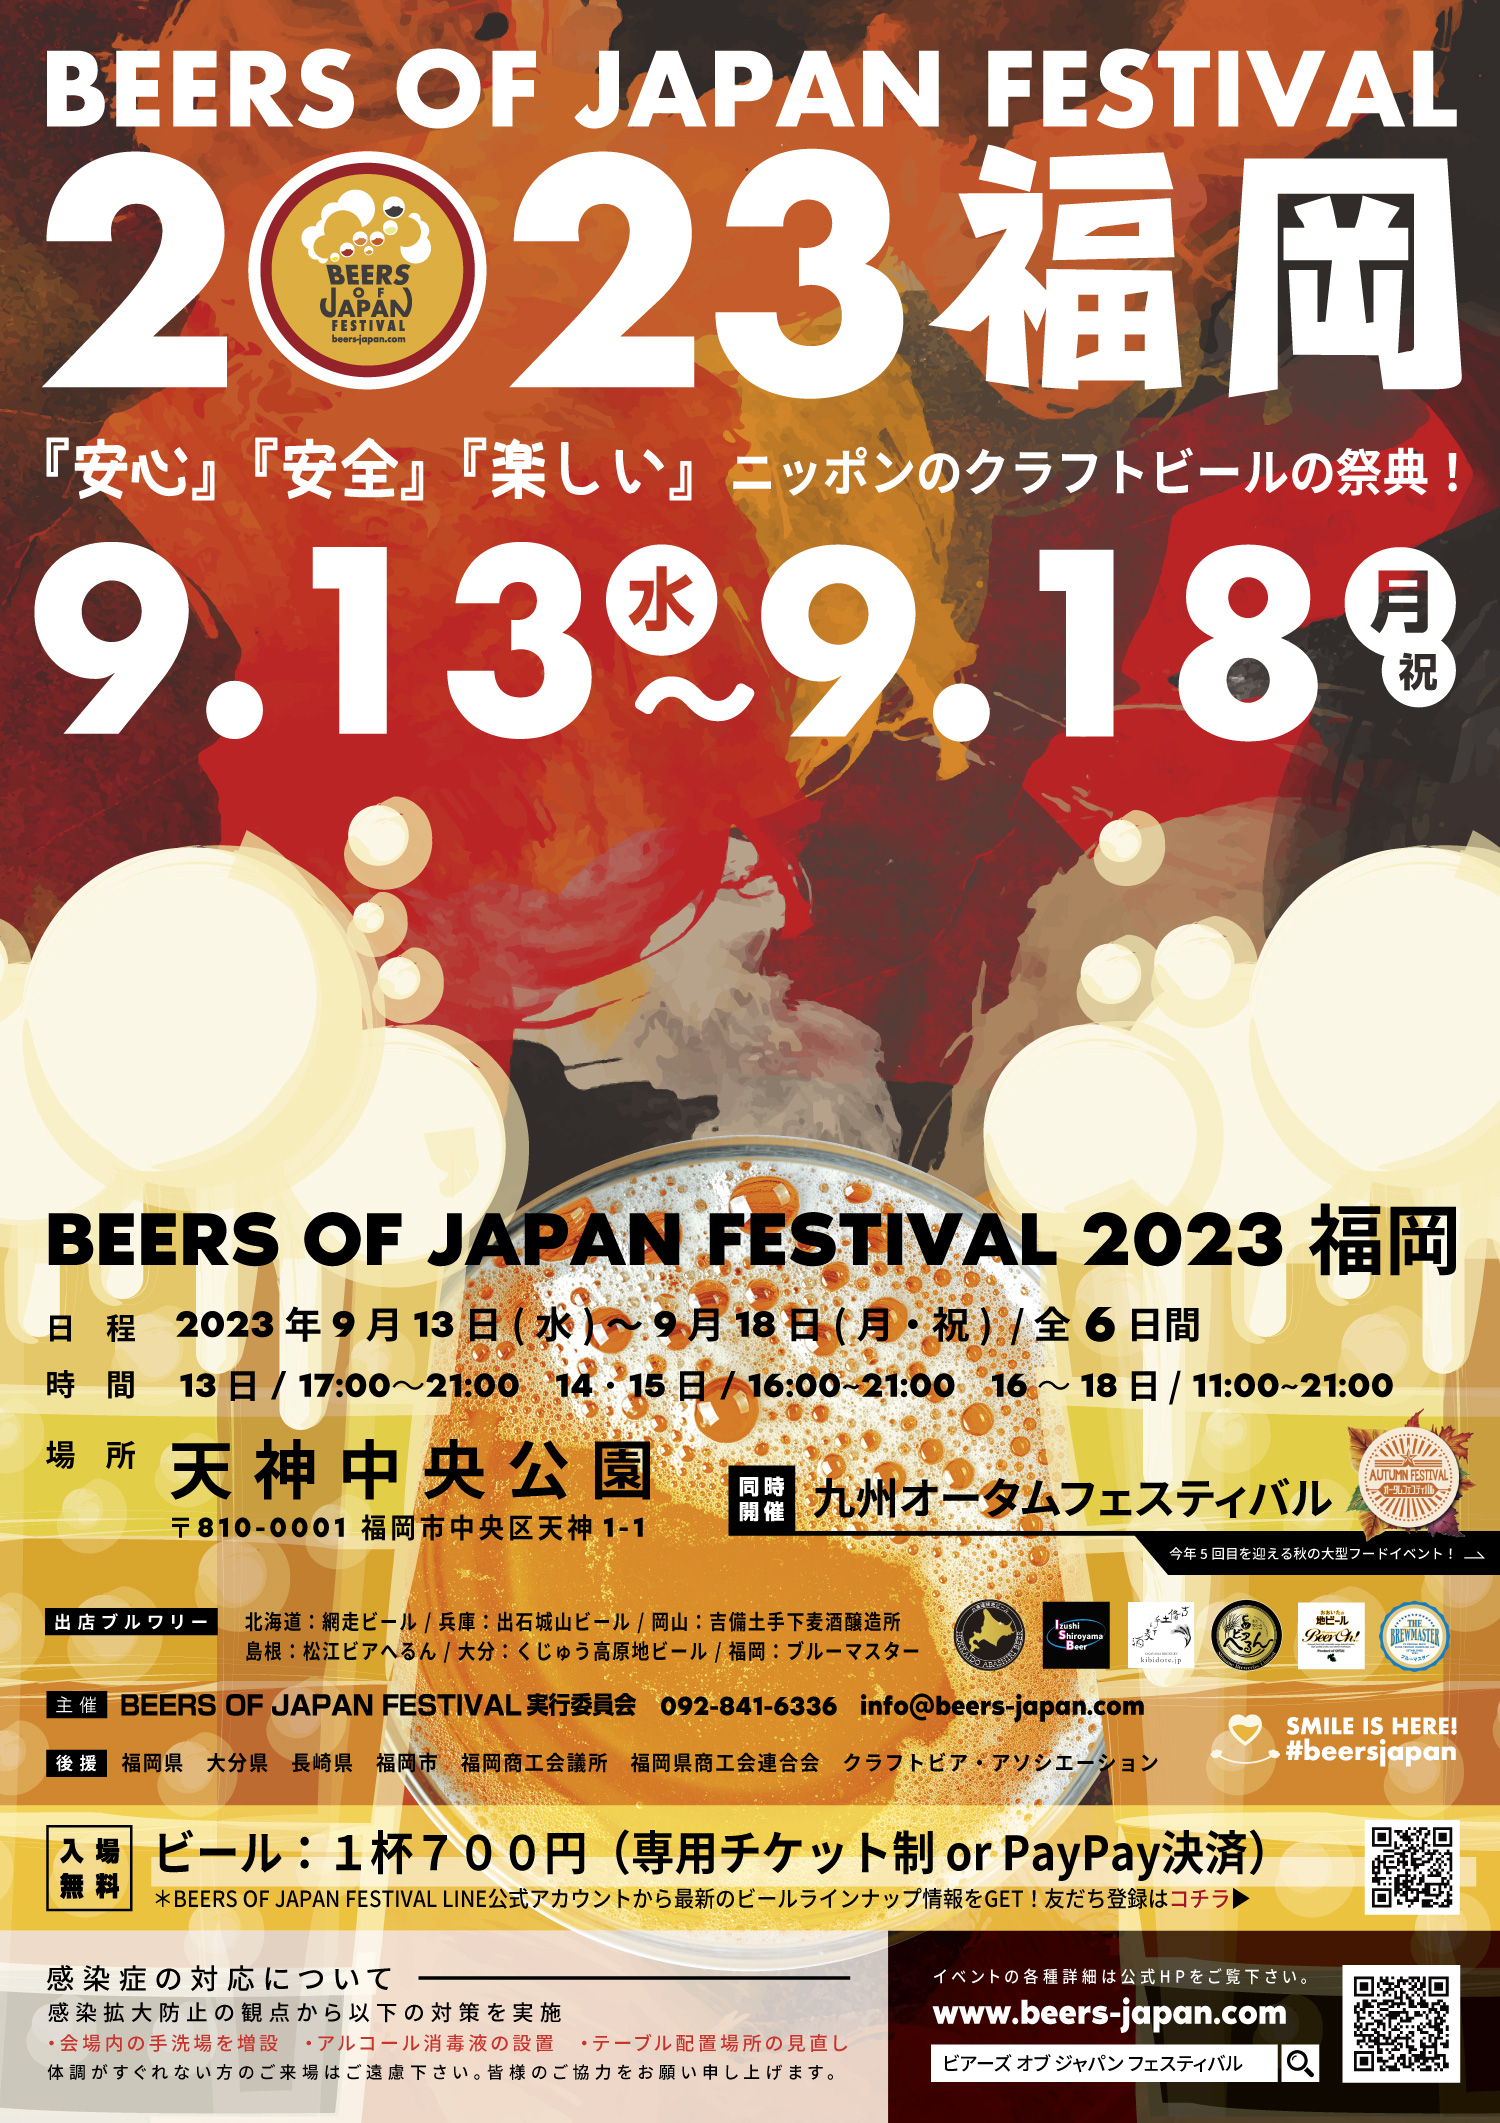 BEERS OF JAPAN FESTIVAL 2023 福岡会場のポスターデザイン